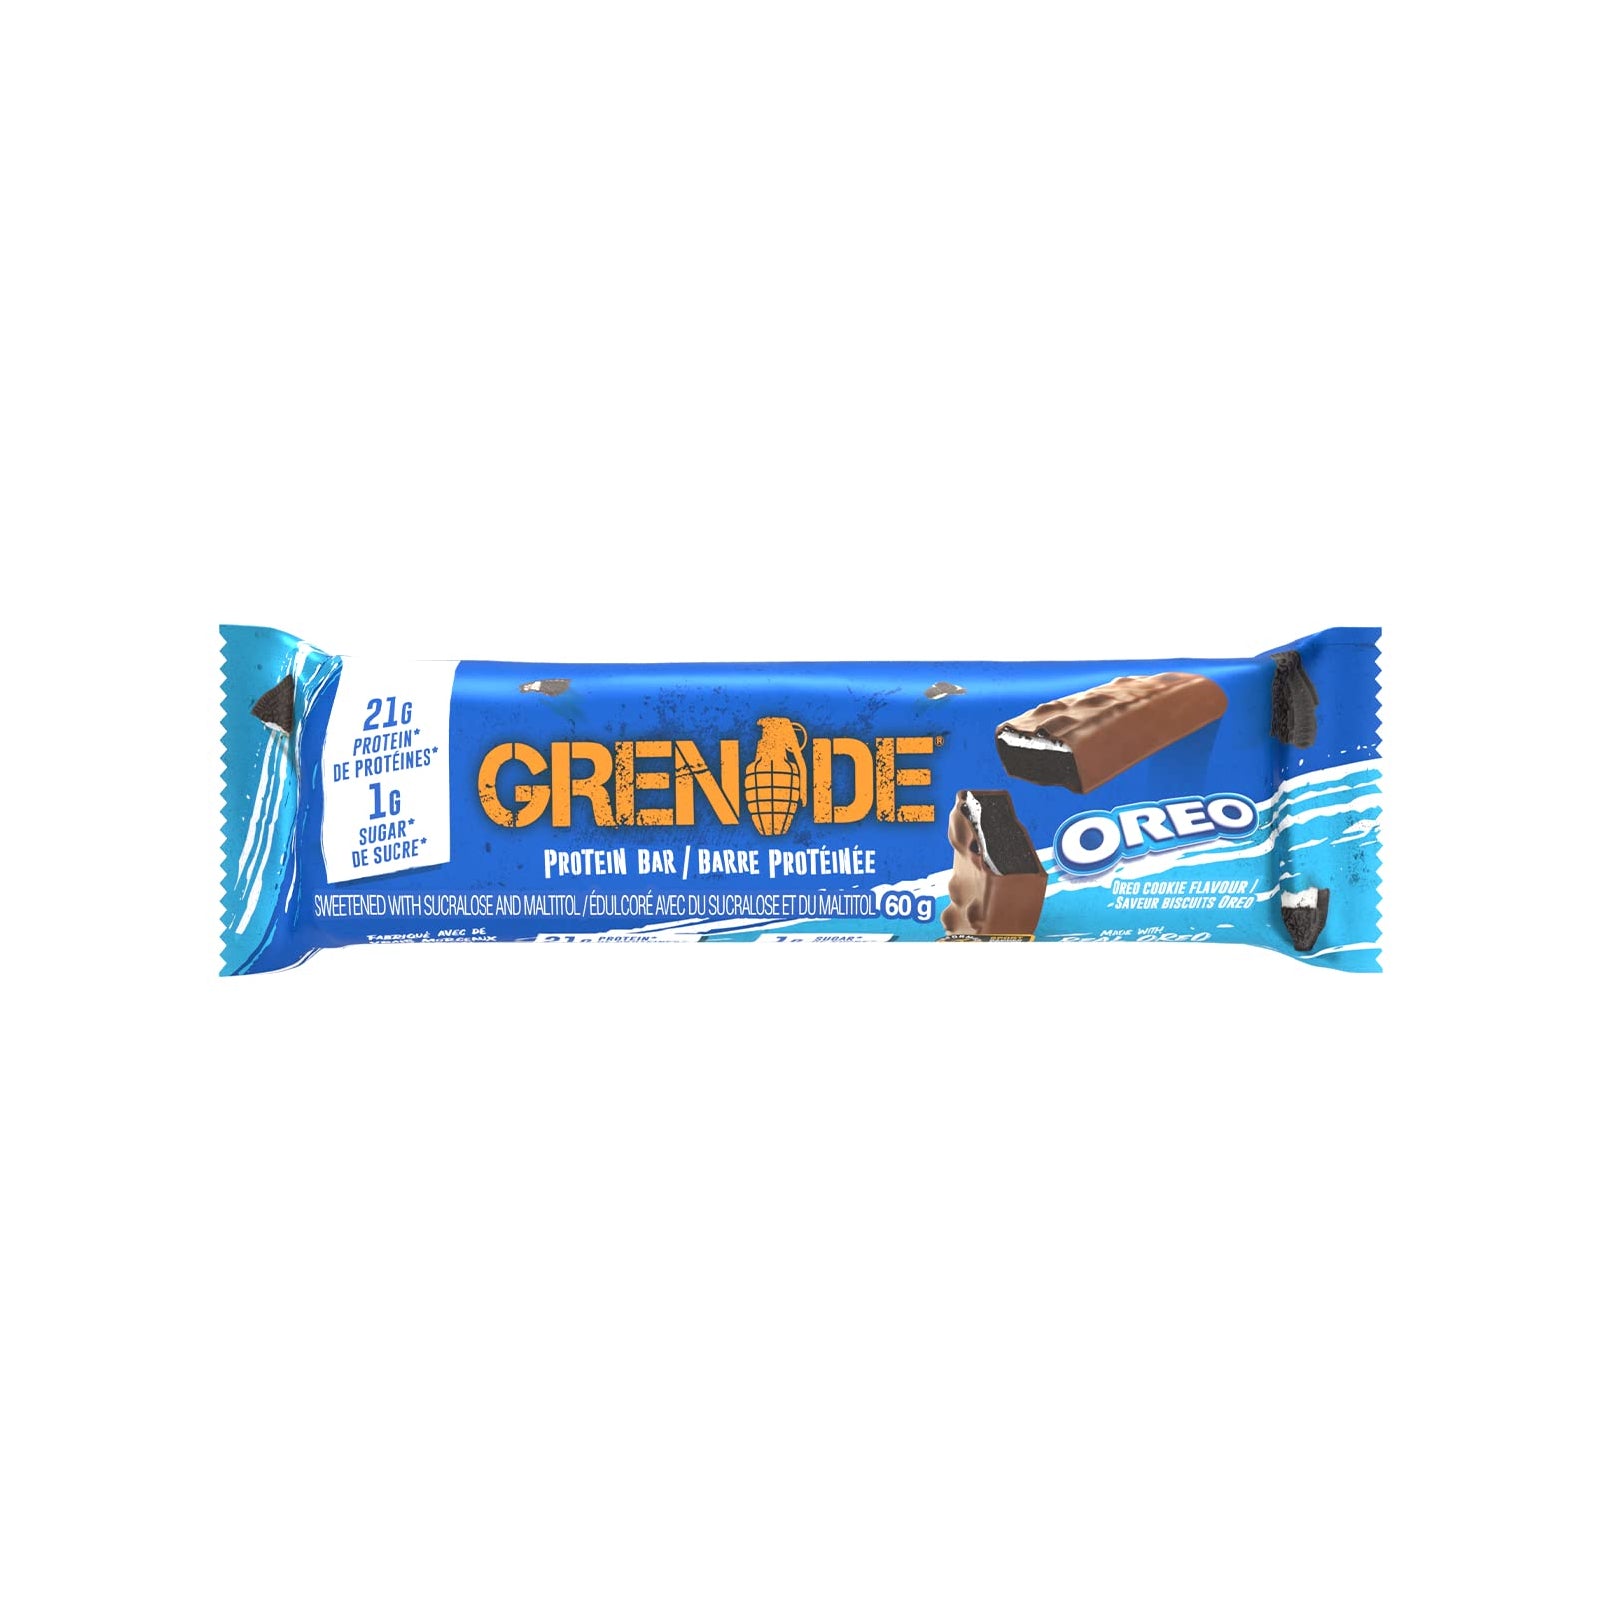 Grenade Protein Bars Oreo / Pack of 12